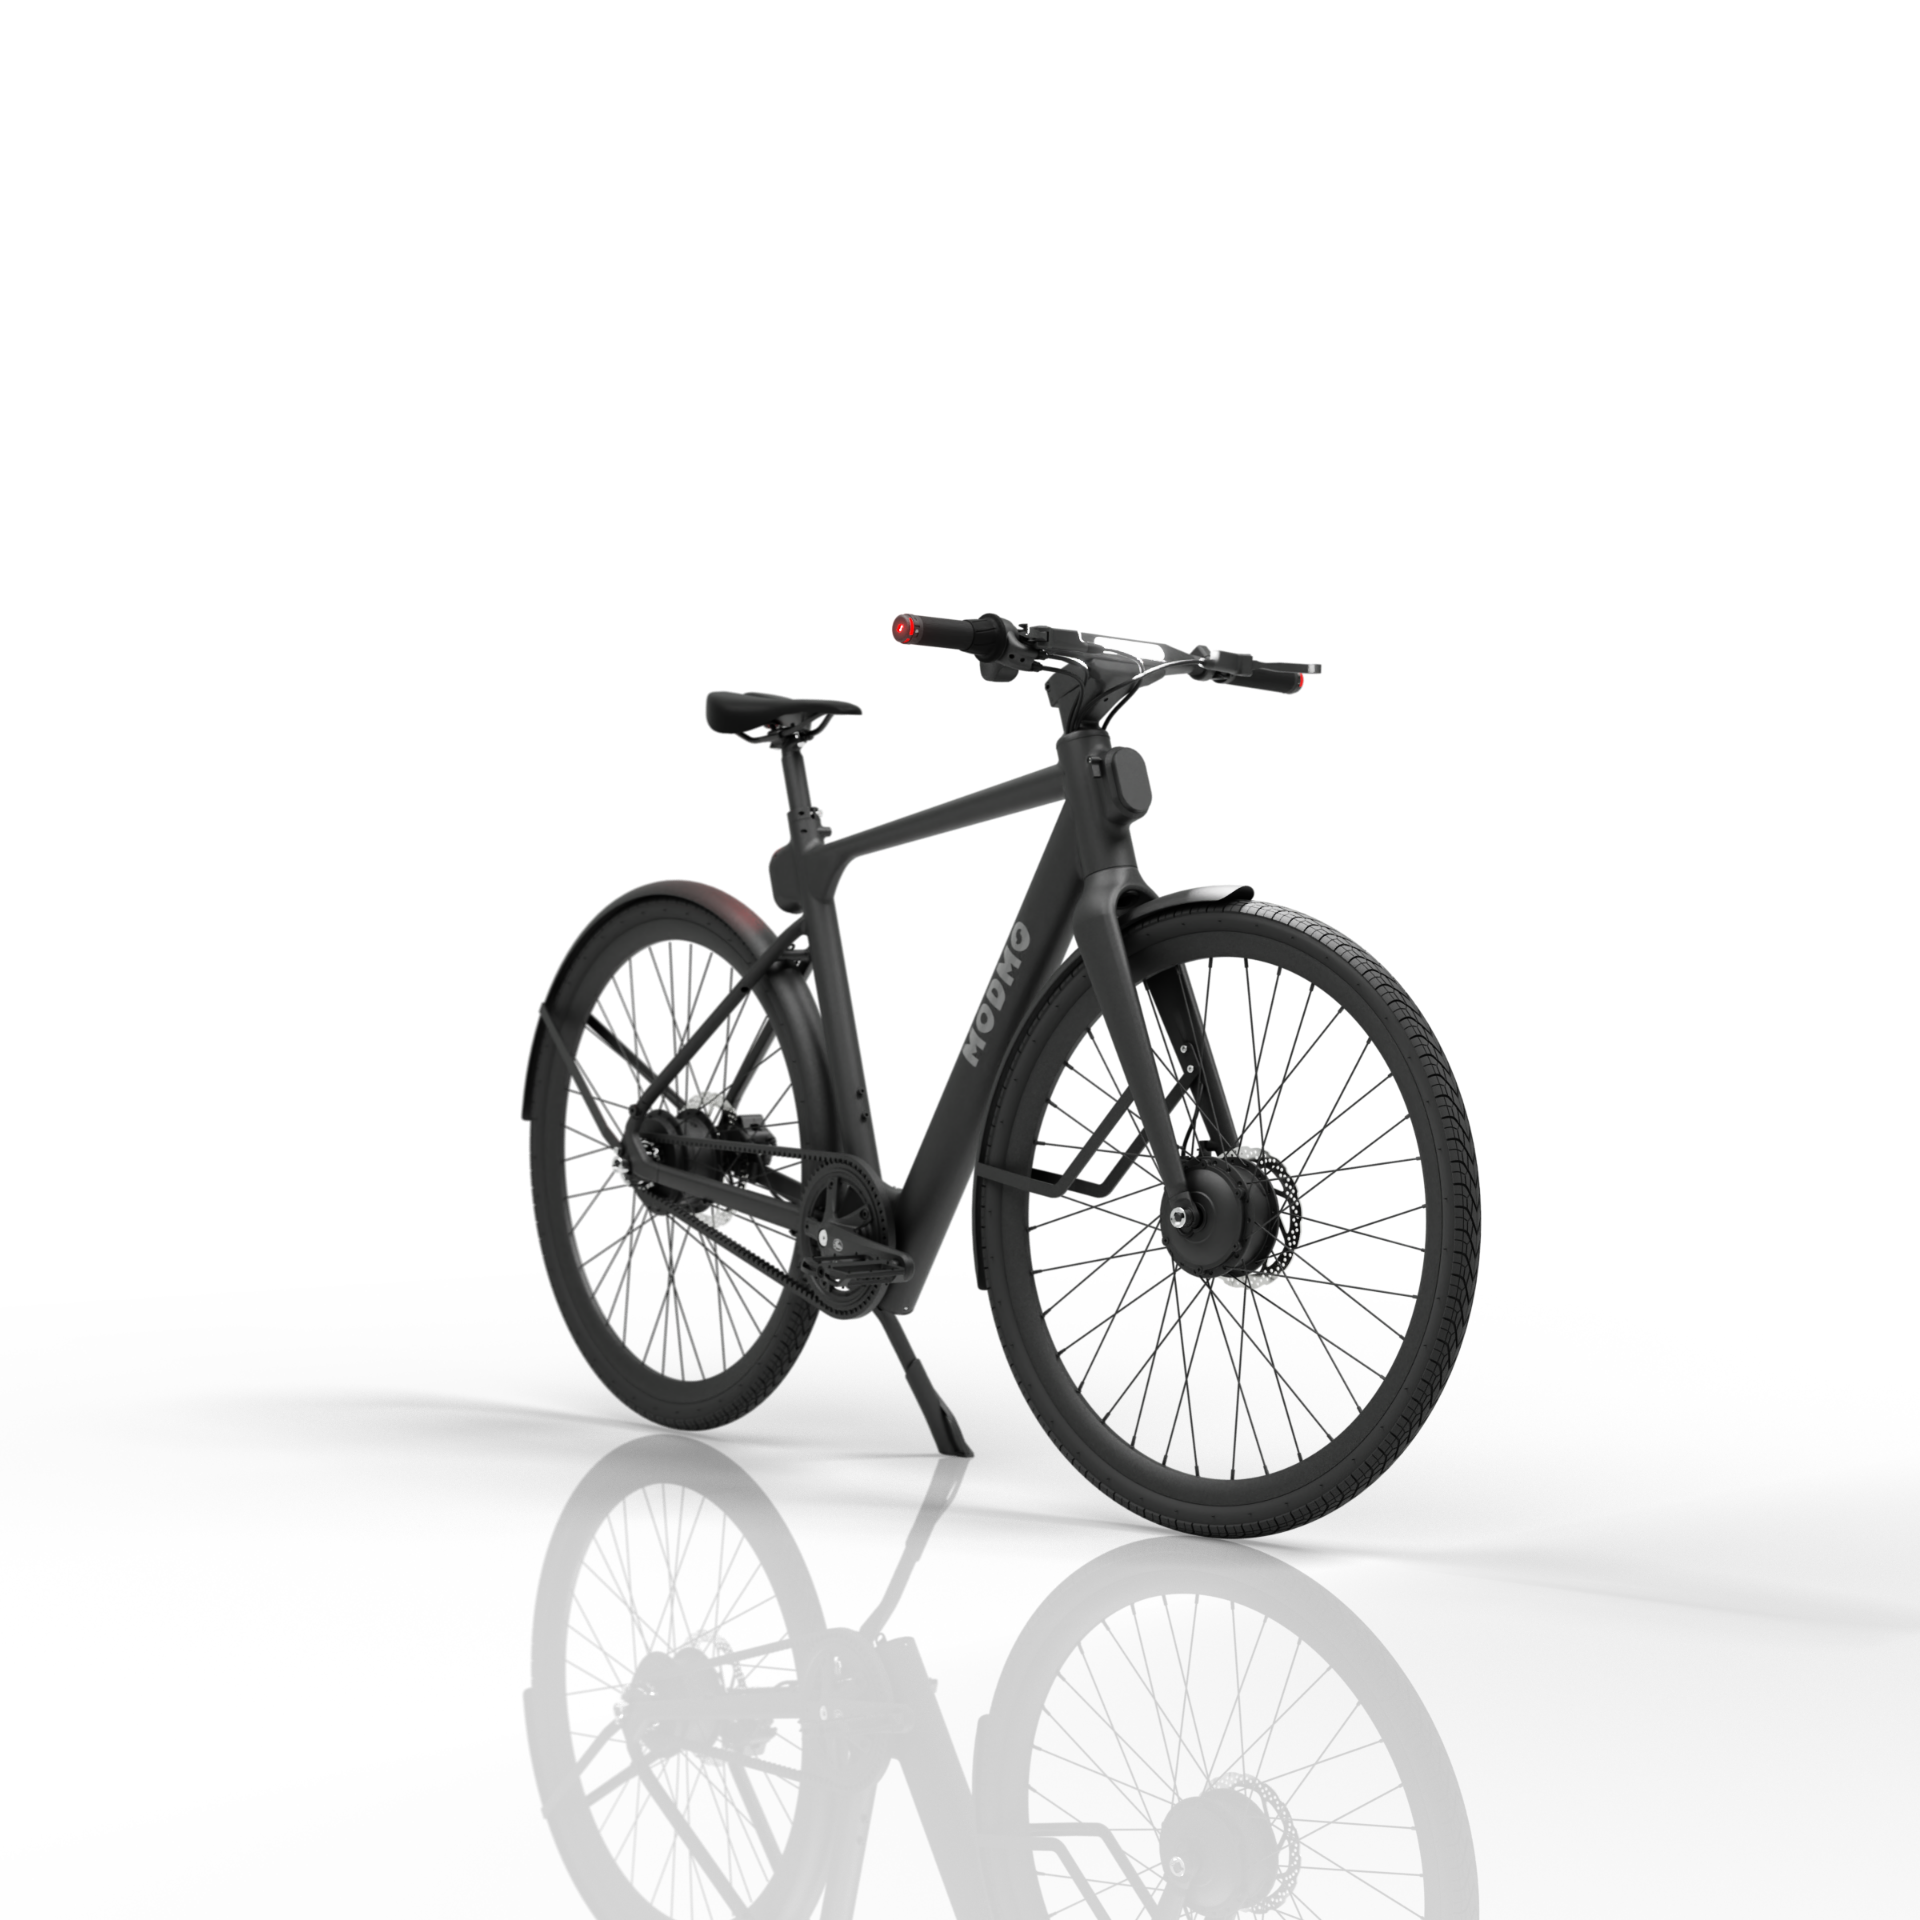 Modmo Saigon+ Electric Bicycle - RRP £2800 - Size L (Rider 175-190cm) - Image 2 of 19